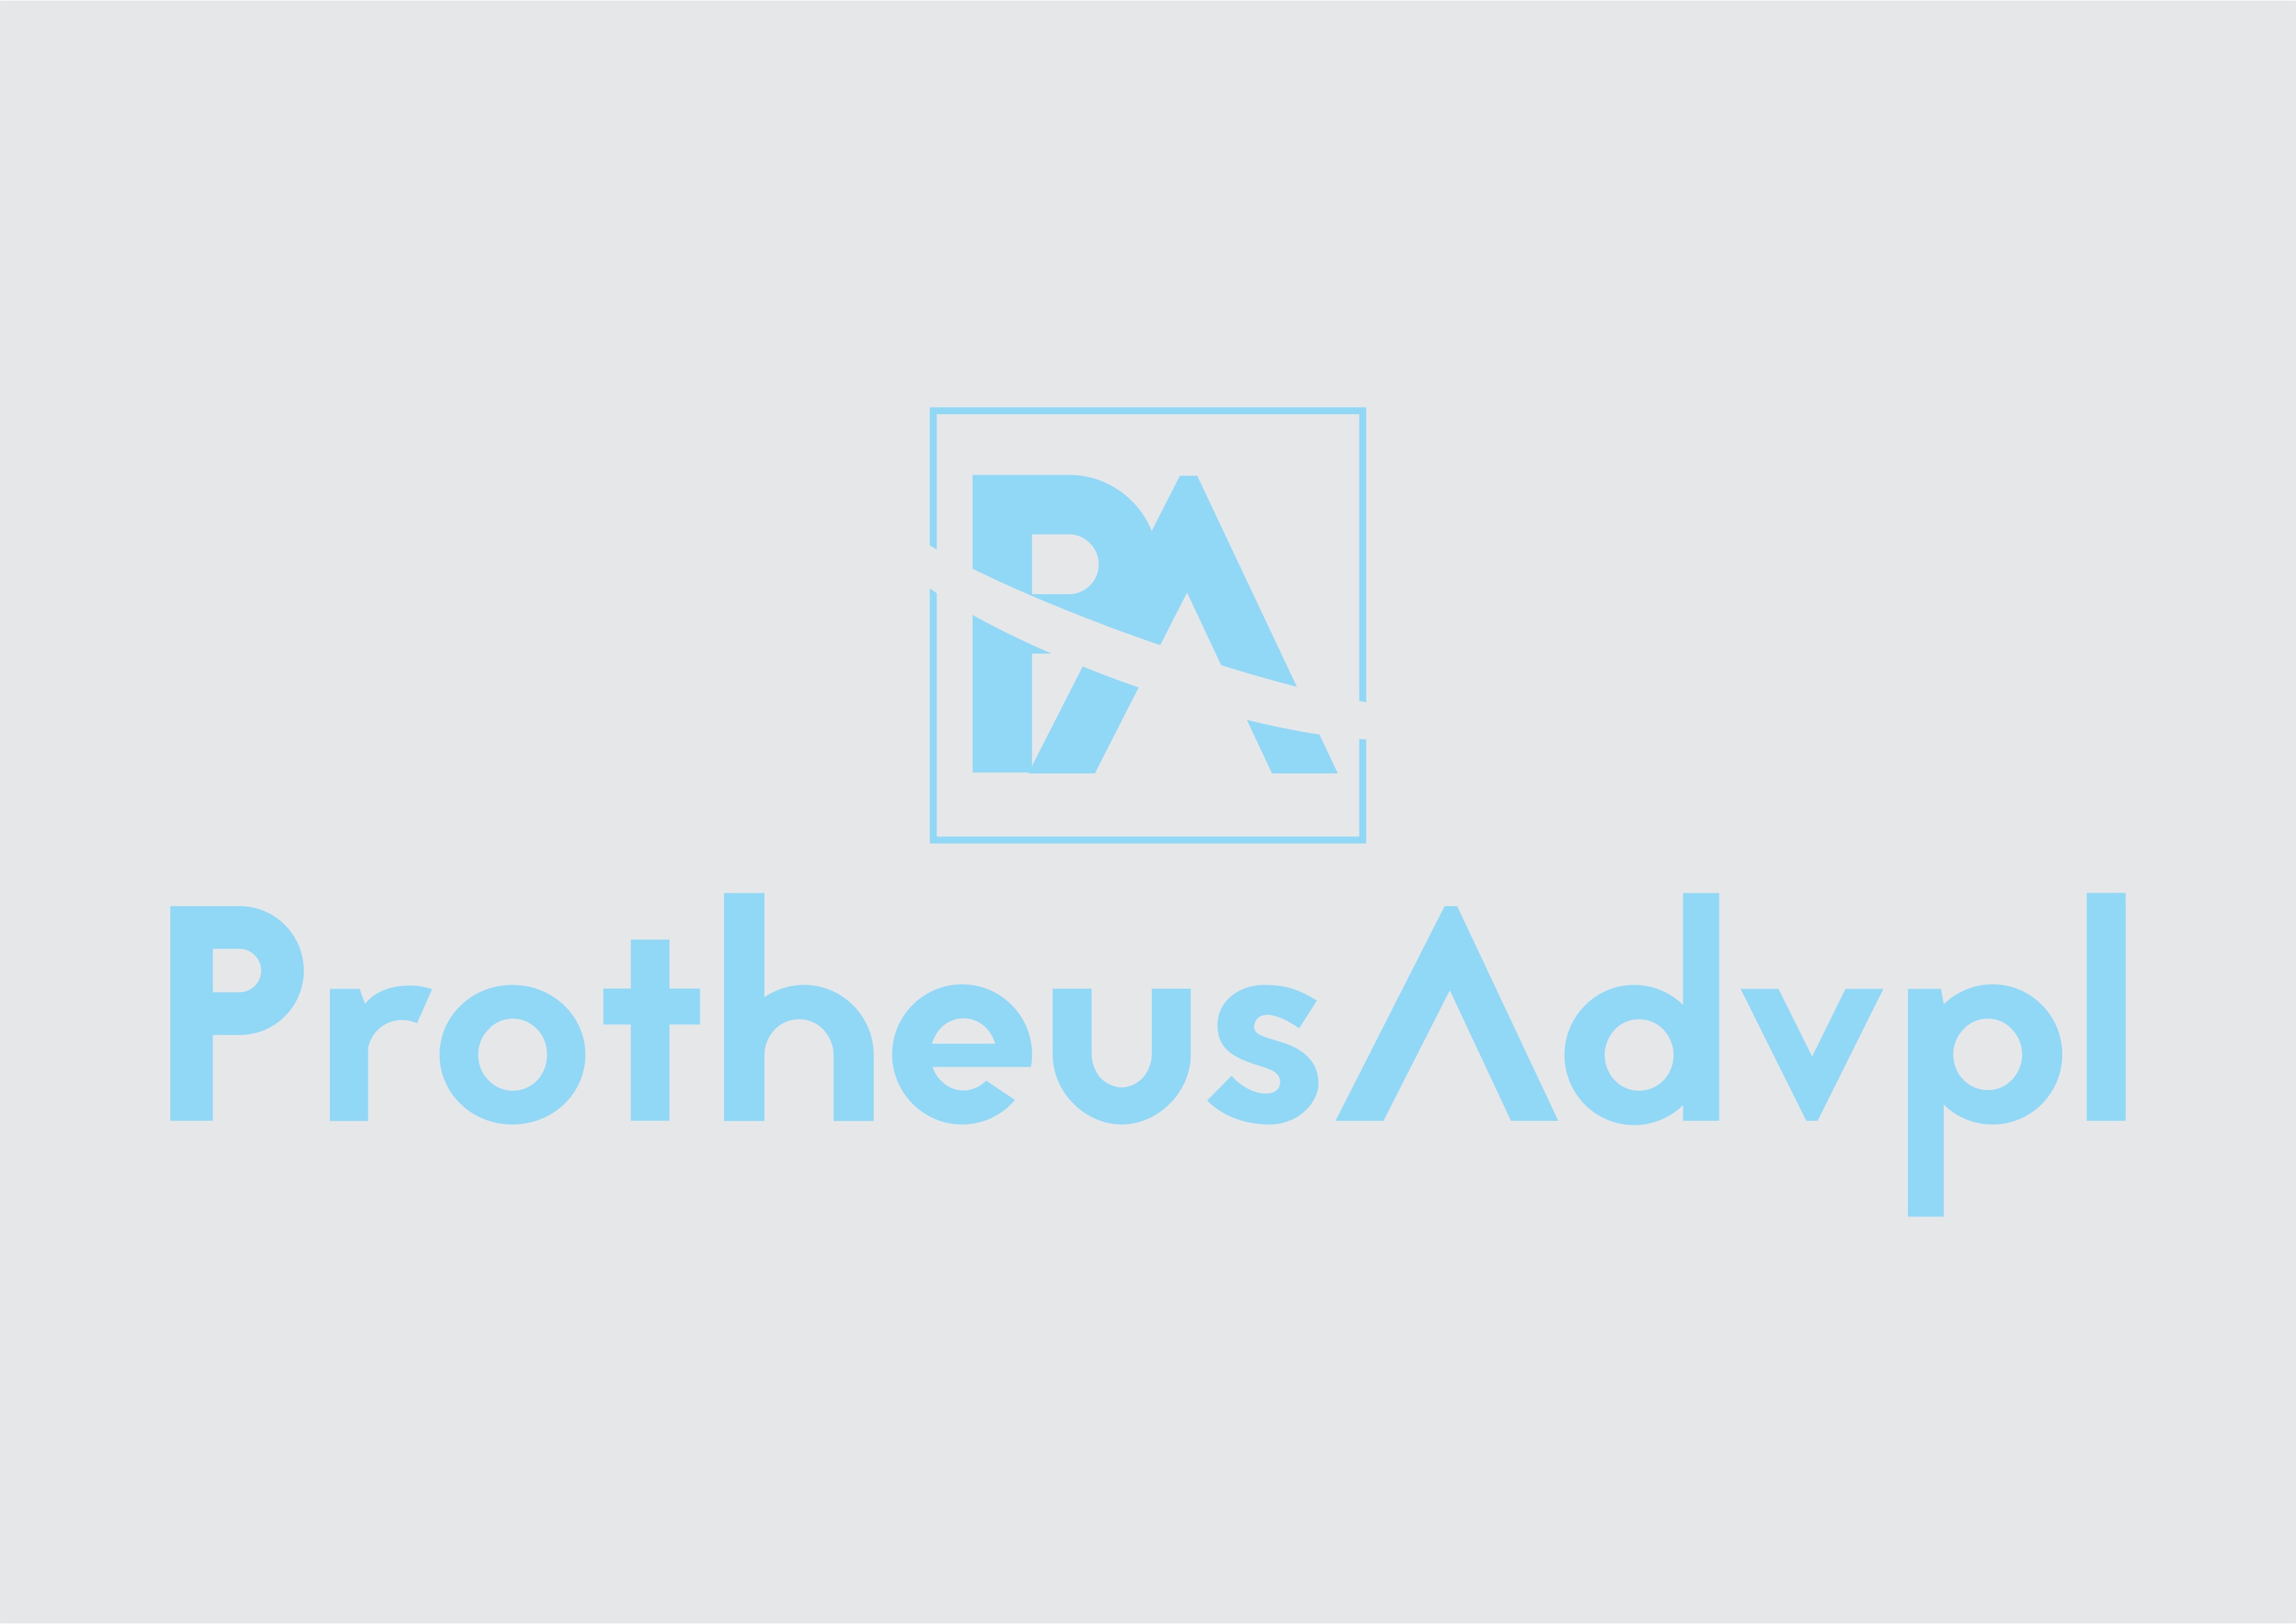 Protheus - logo picture